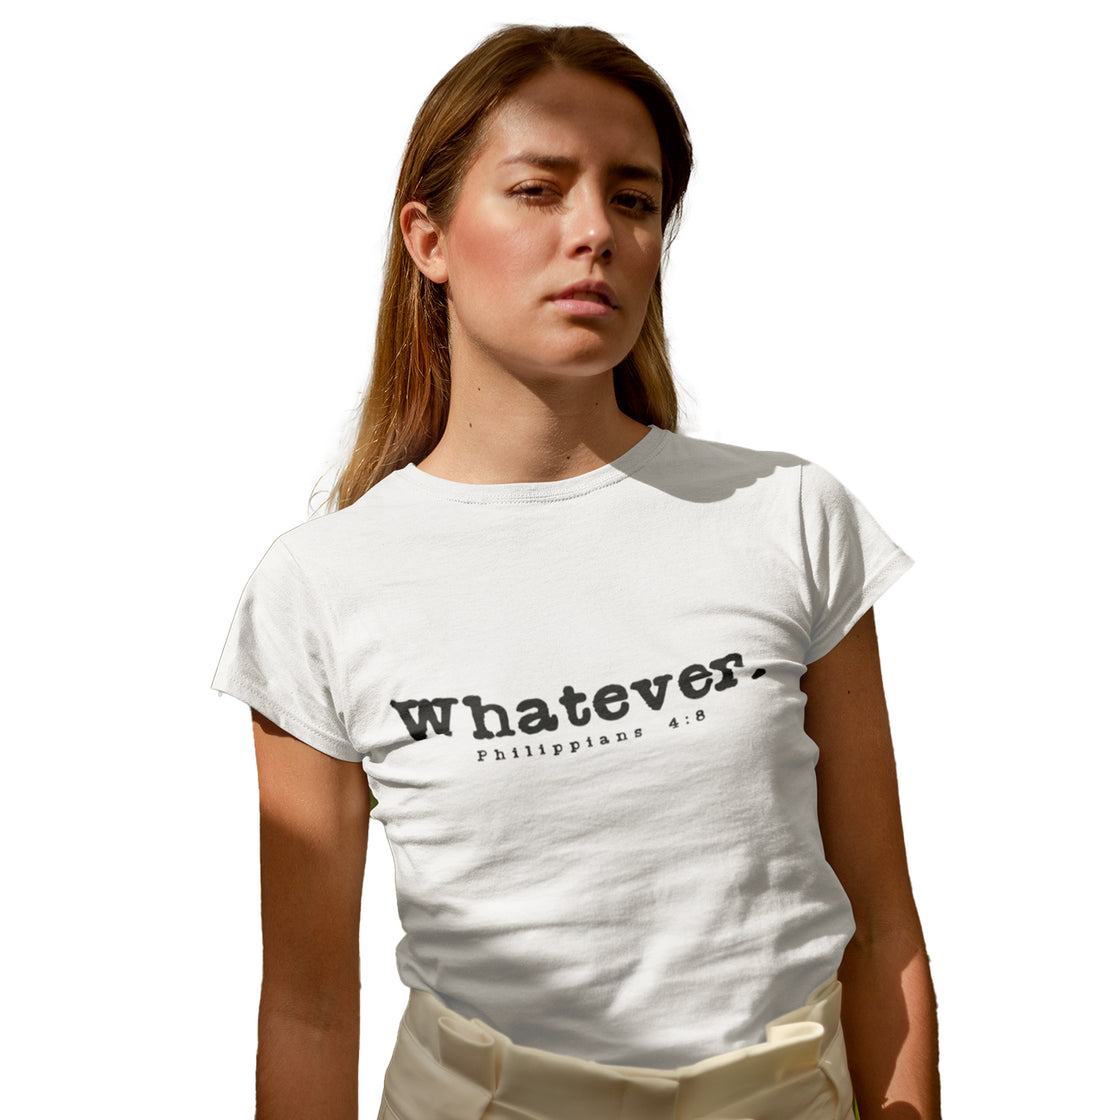 Whatever - Women's Tee